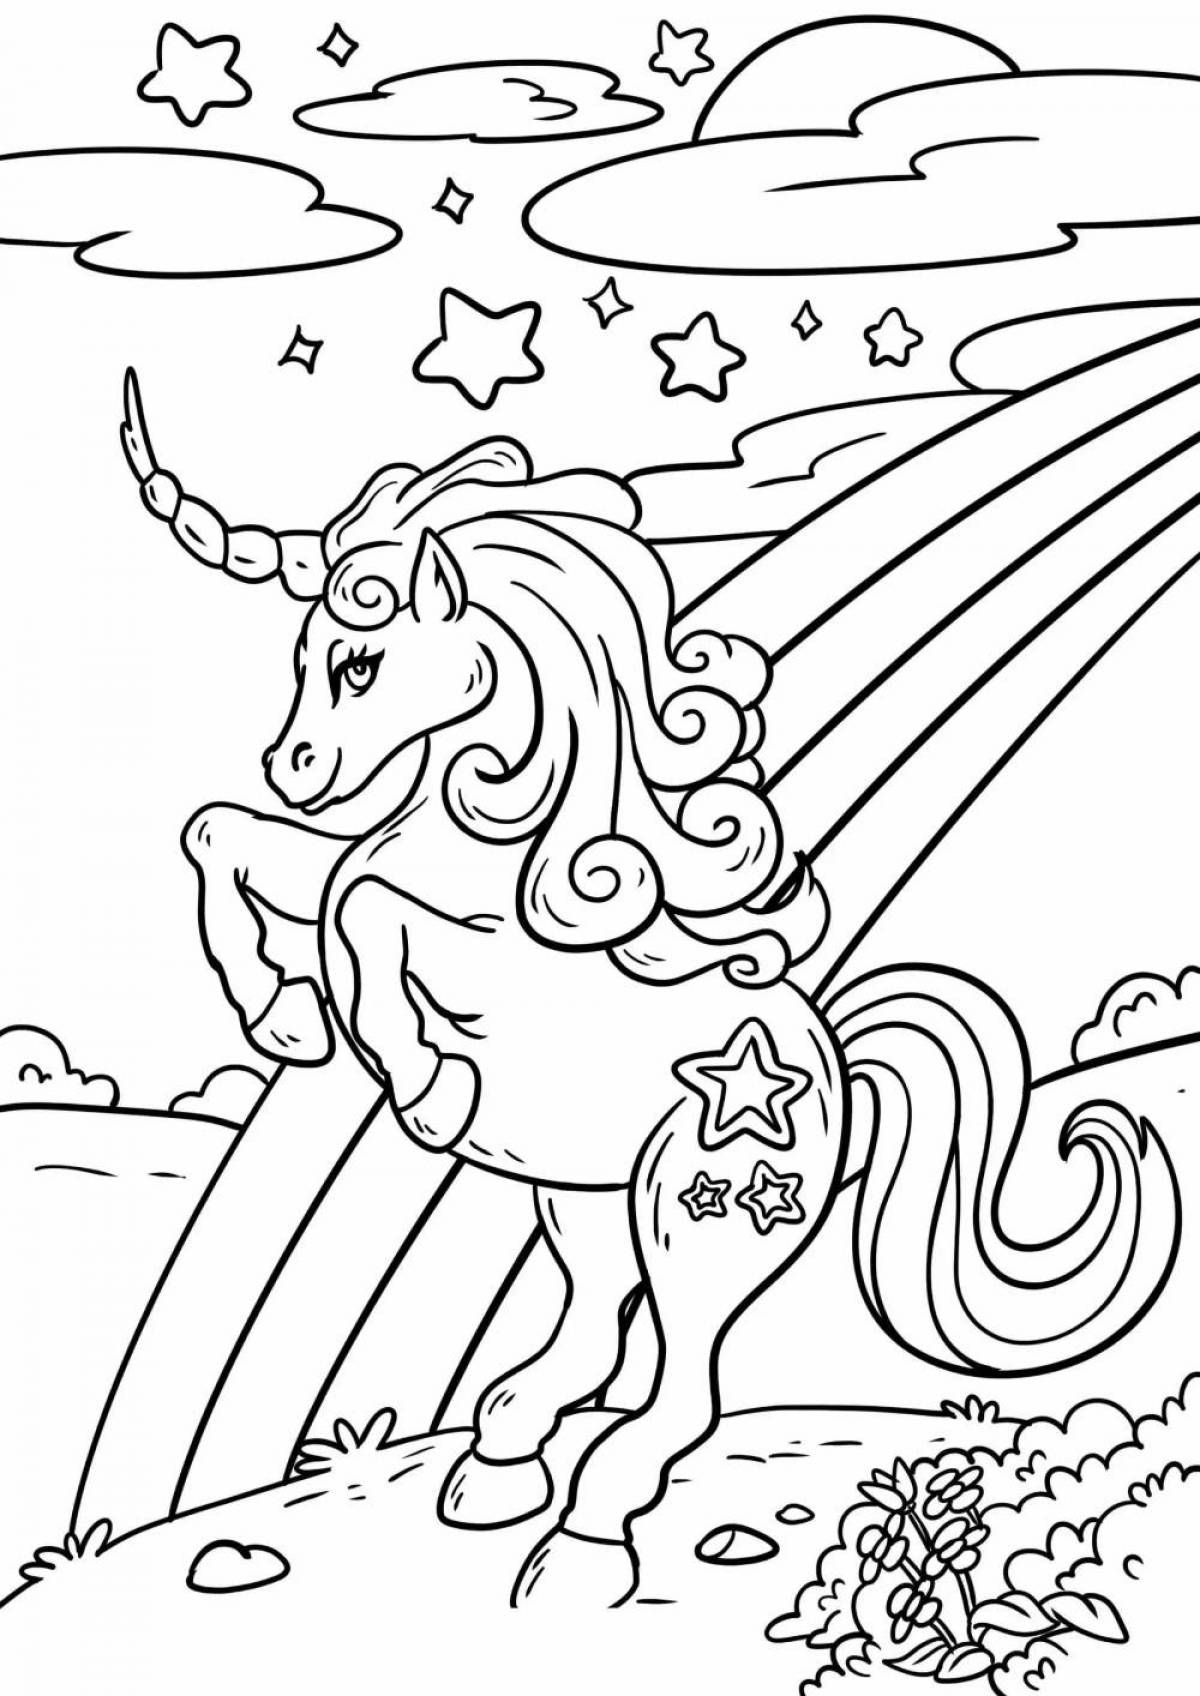 Joyful coloring unicorn for children 6-7 years old